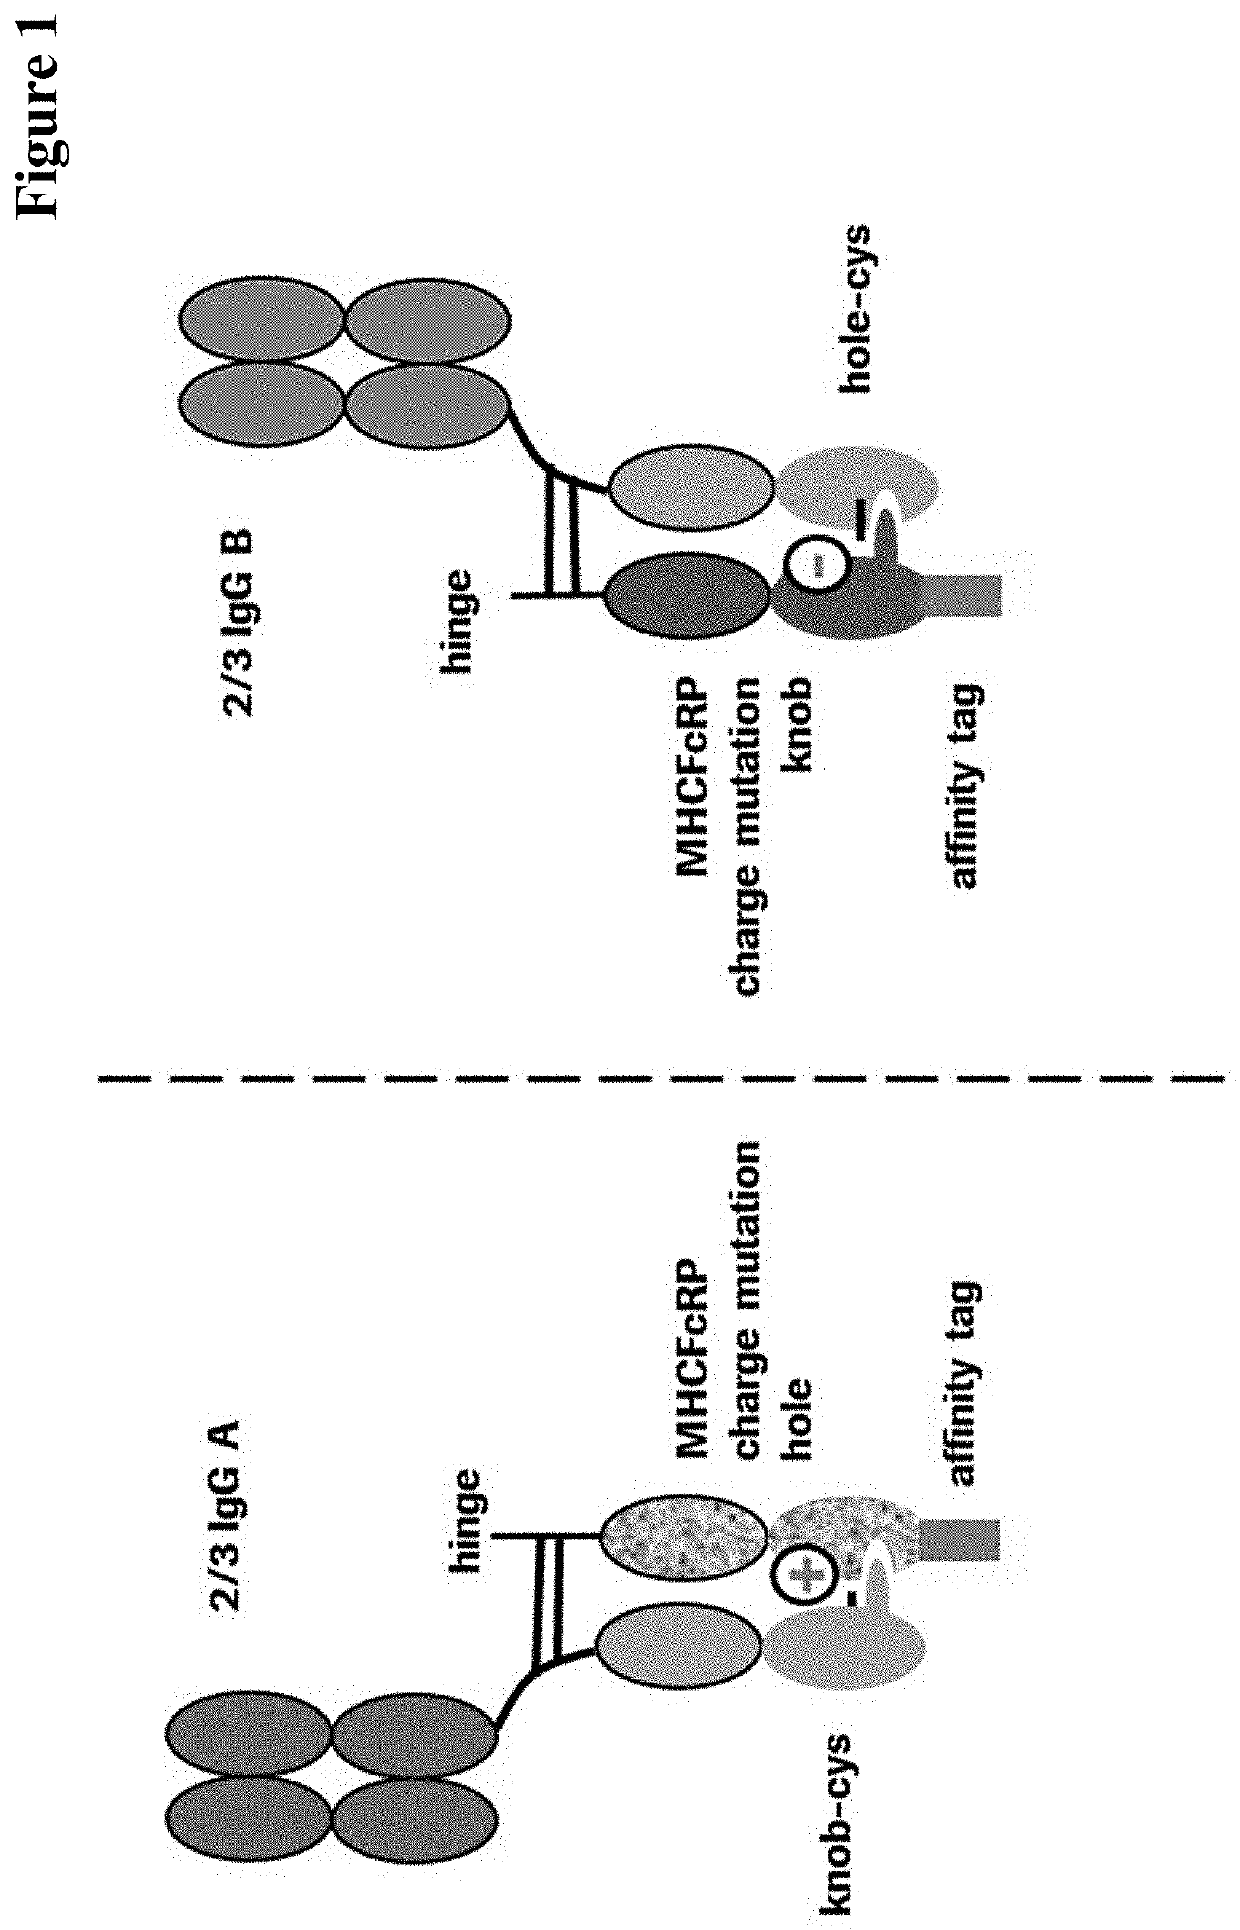 Method for in vivo generation of multispecific antibodies from monospecific antibodies